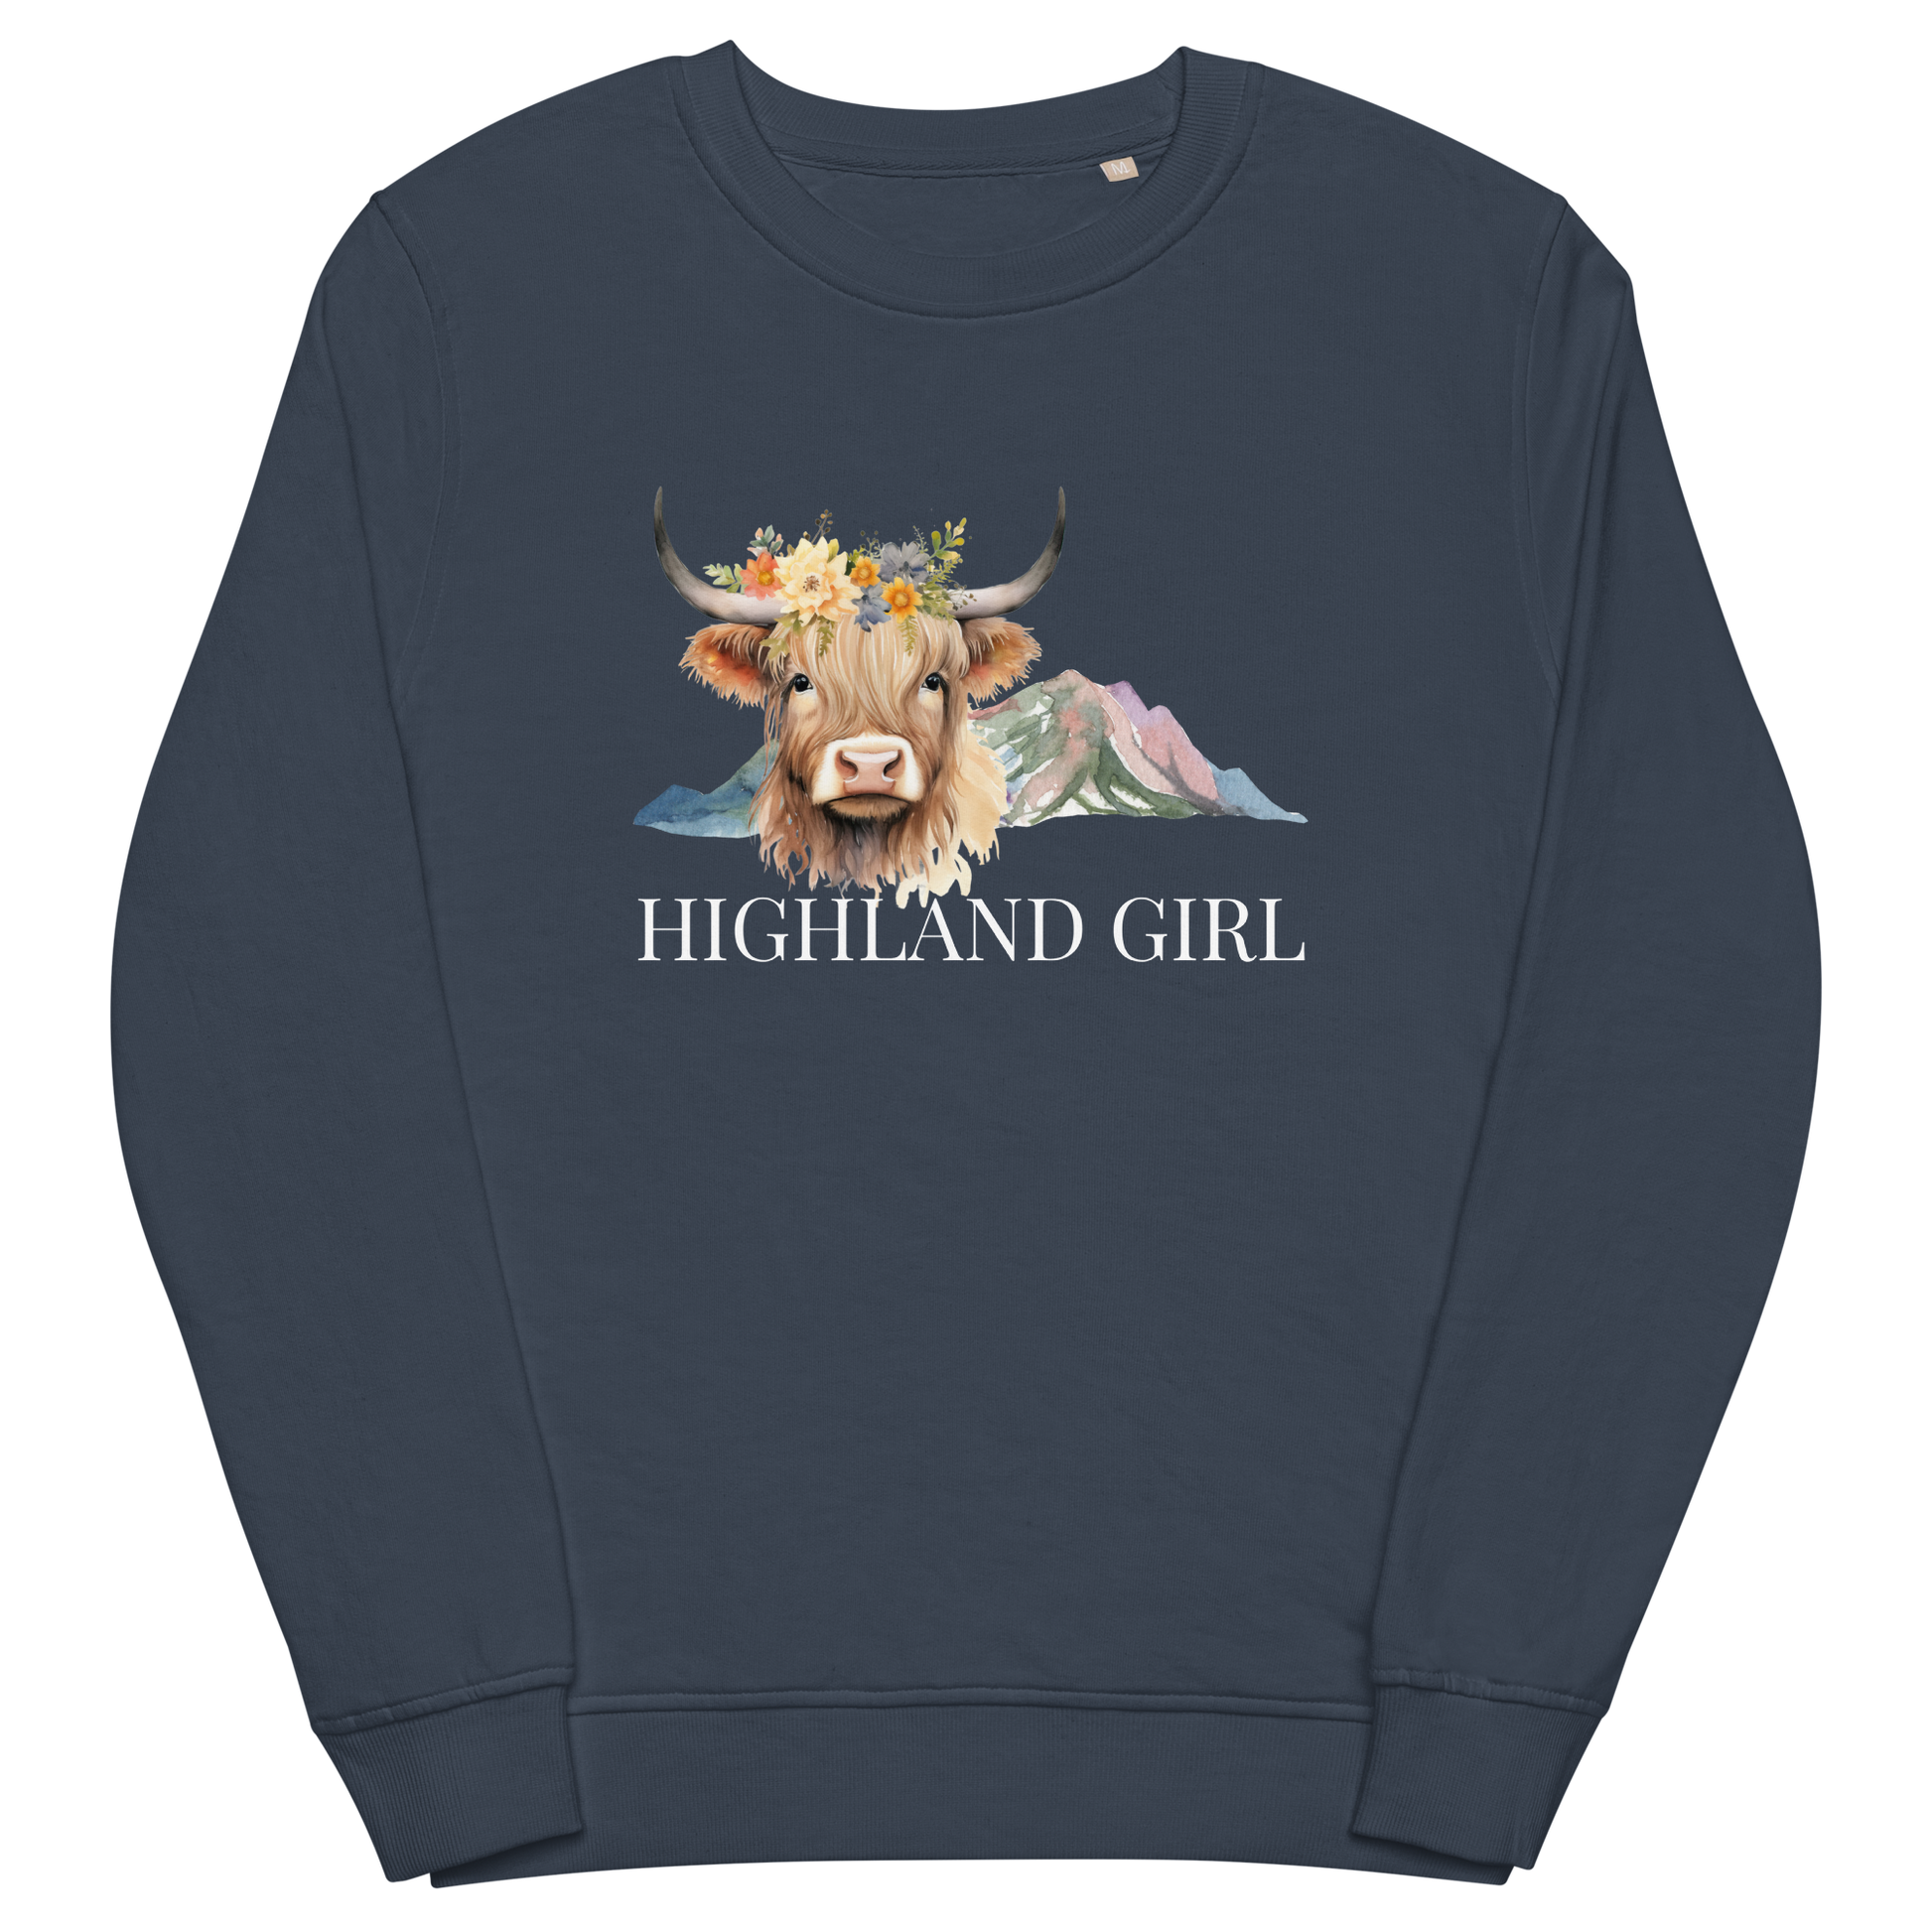 French Navy Organic Cotton Highland Cow Sweatshirt showcasing an adorable Highland Girl graphic on the chest - Cute Graphic Highland Cow Sweatshirts - Boozy Fox